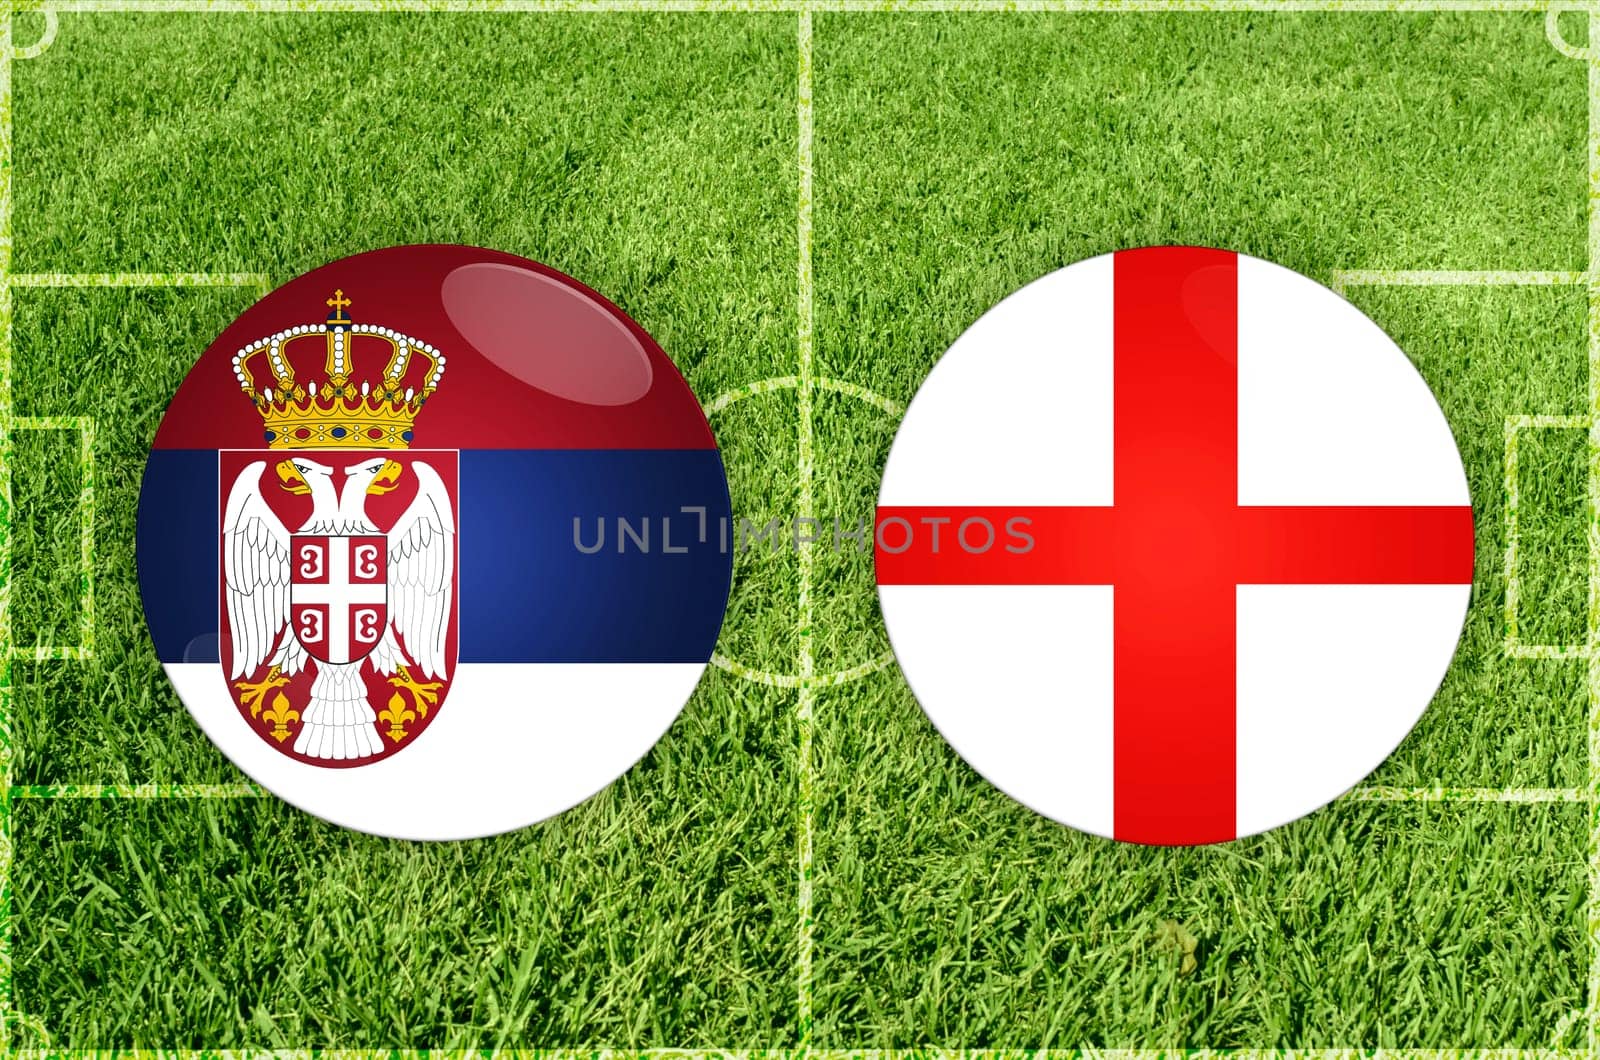 Serbia vs England football match by rusak